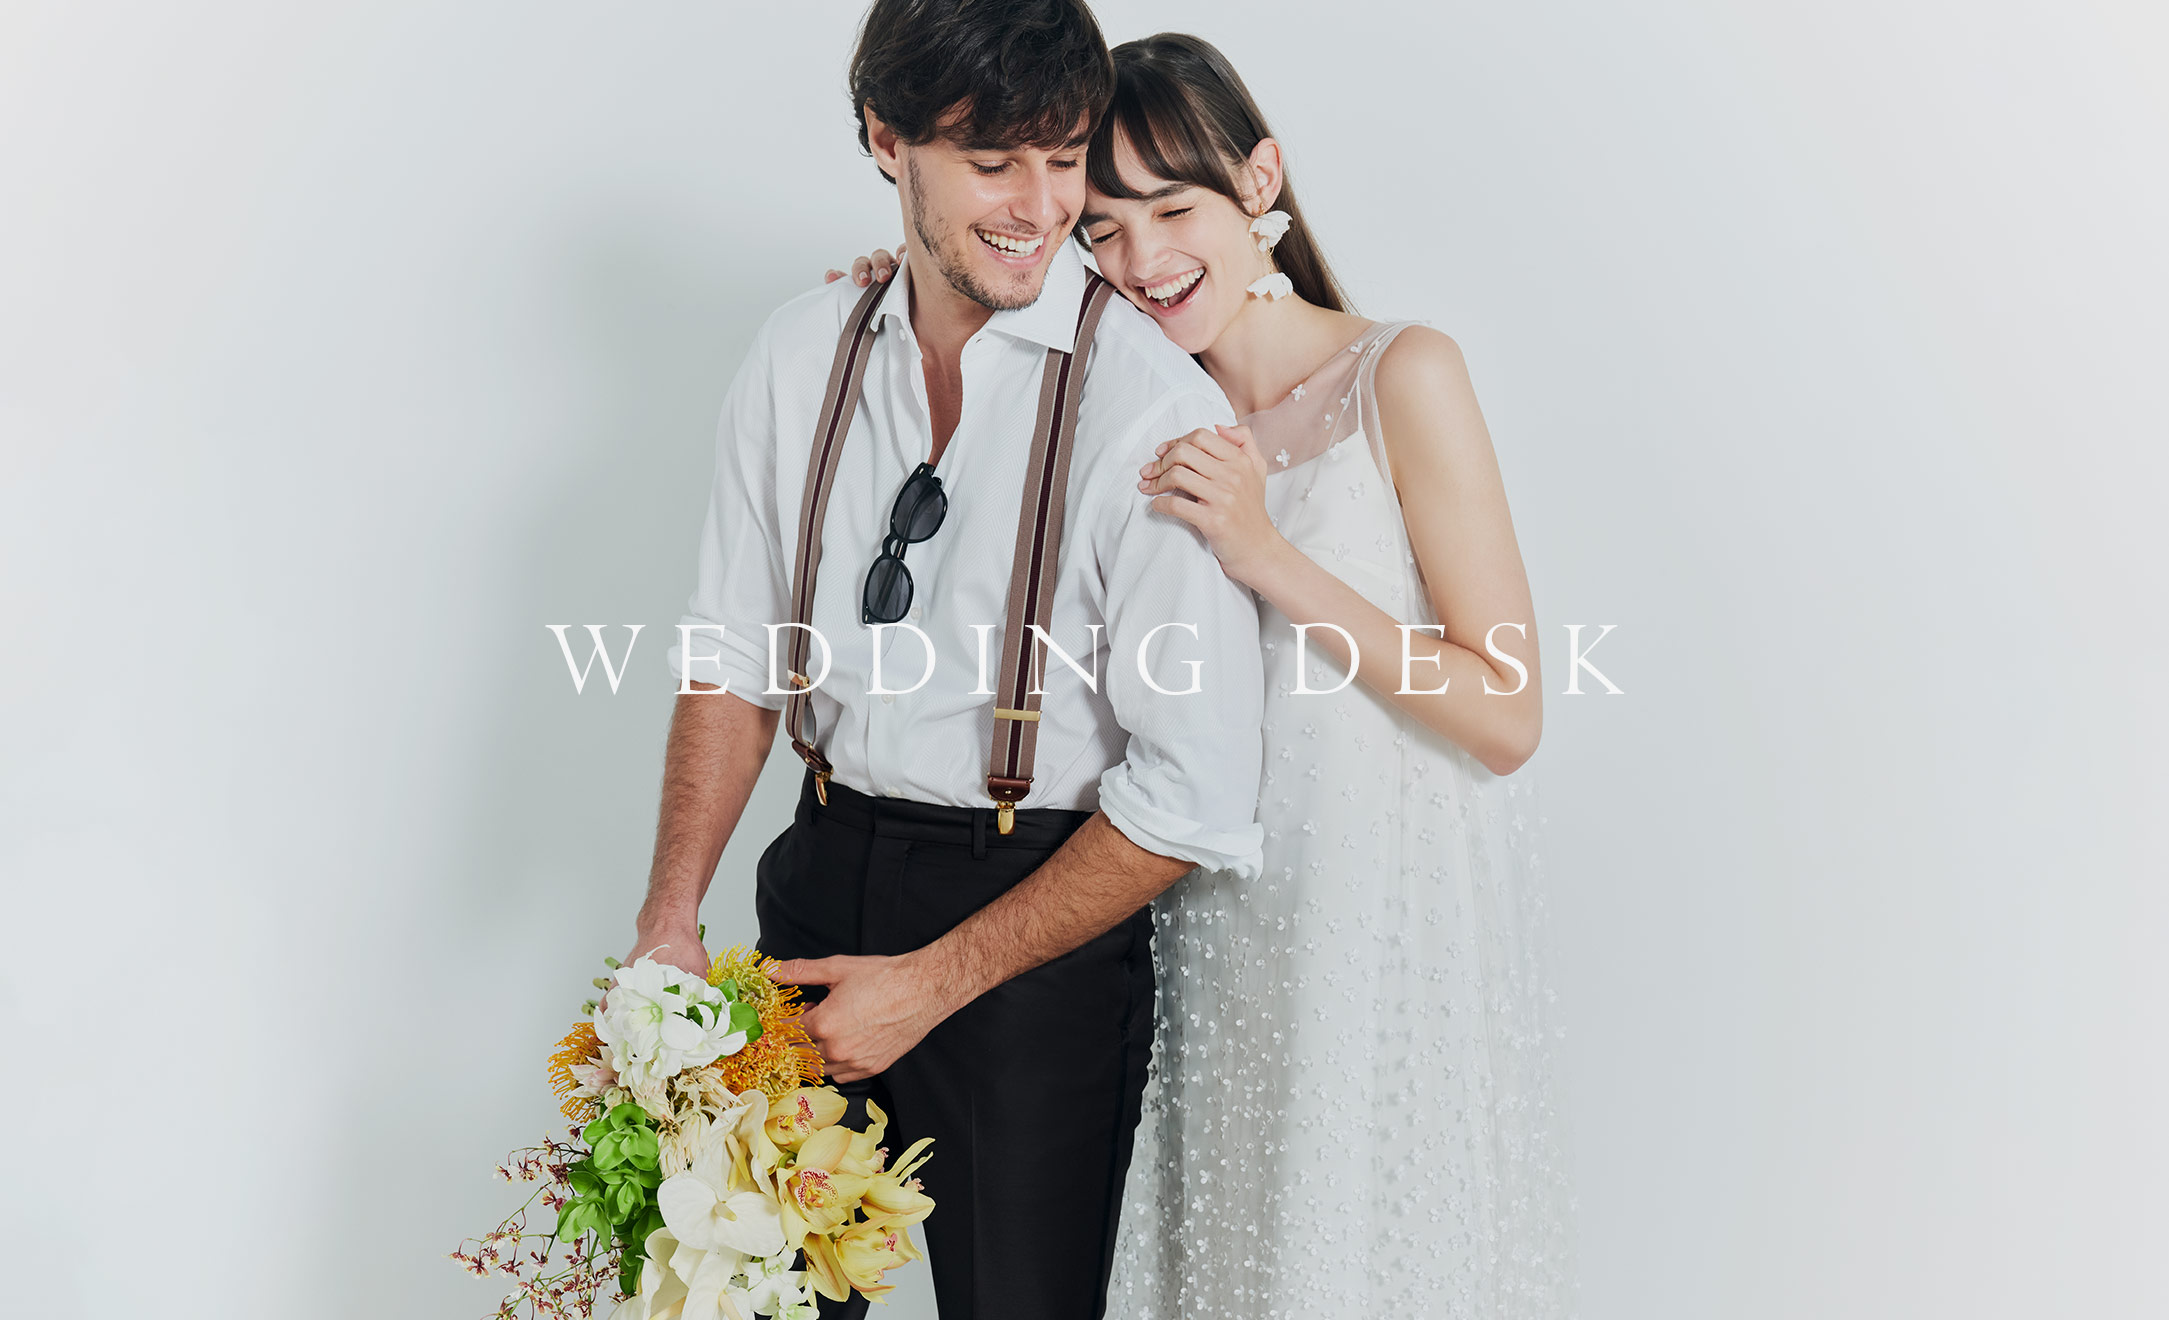 TAKAMI BRIDAL WEDDING DESK KOBE パソコン用の画像